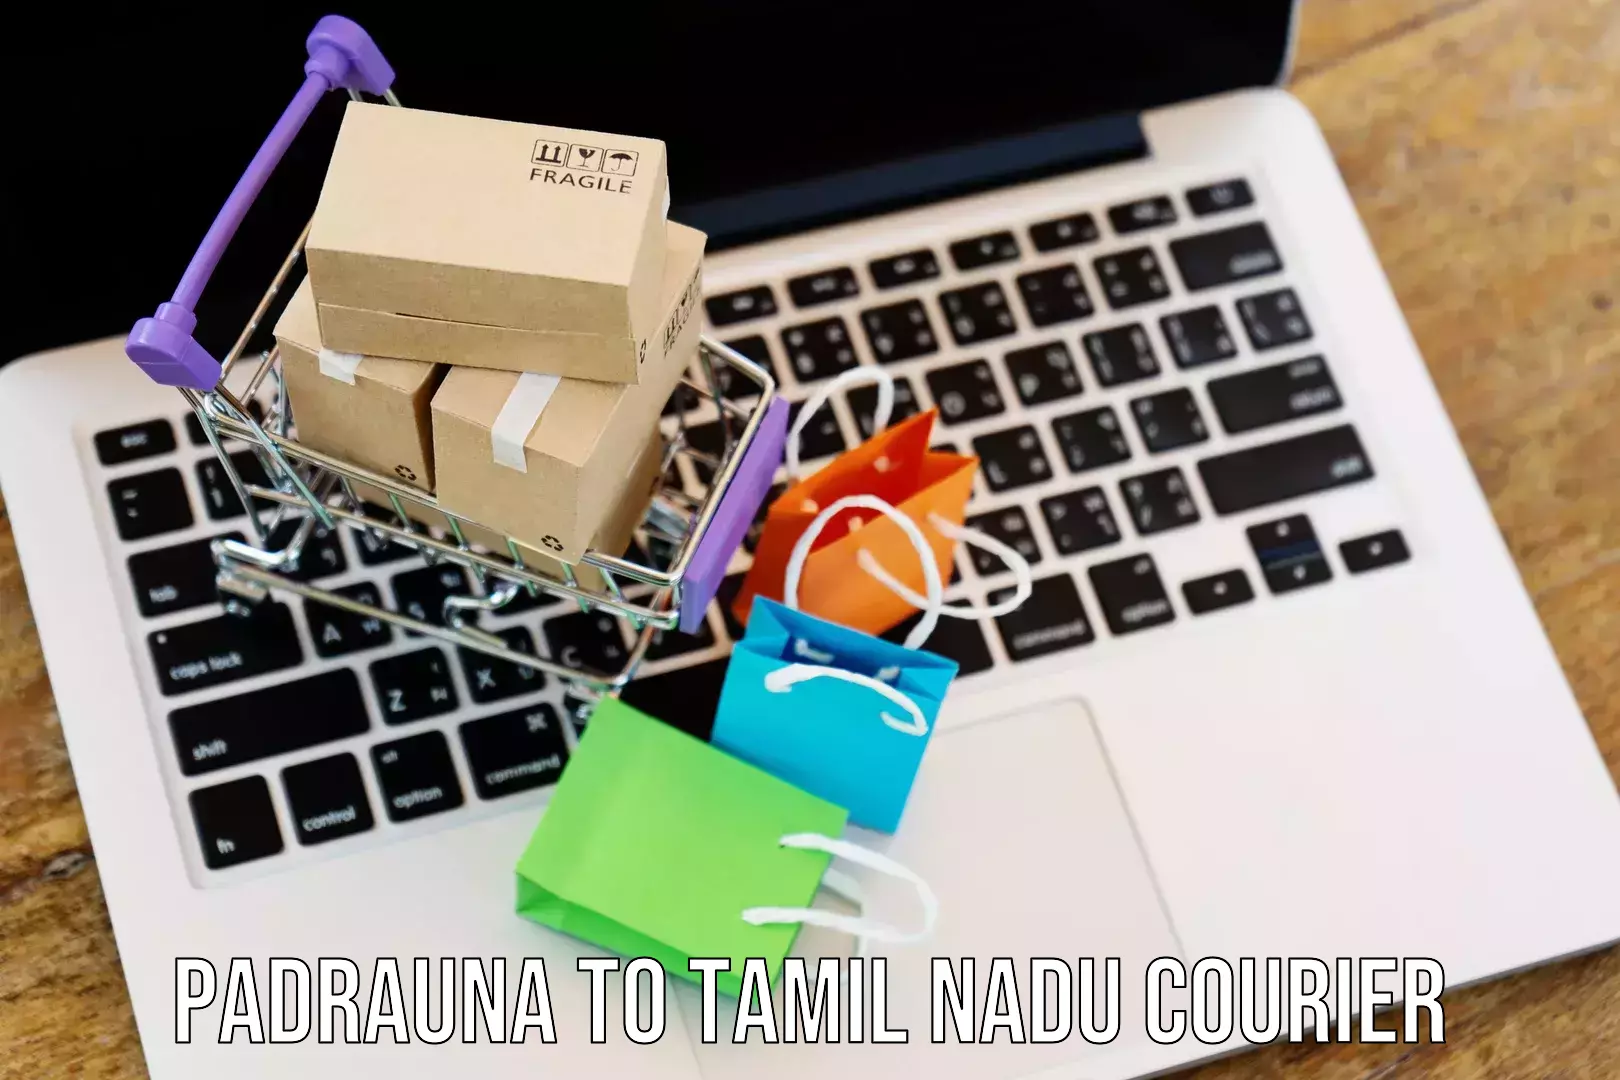 Courier service comparison Padrauna to Tamil Nadu